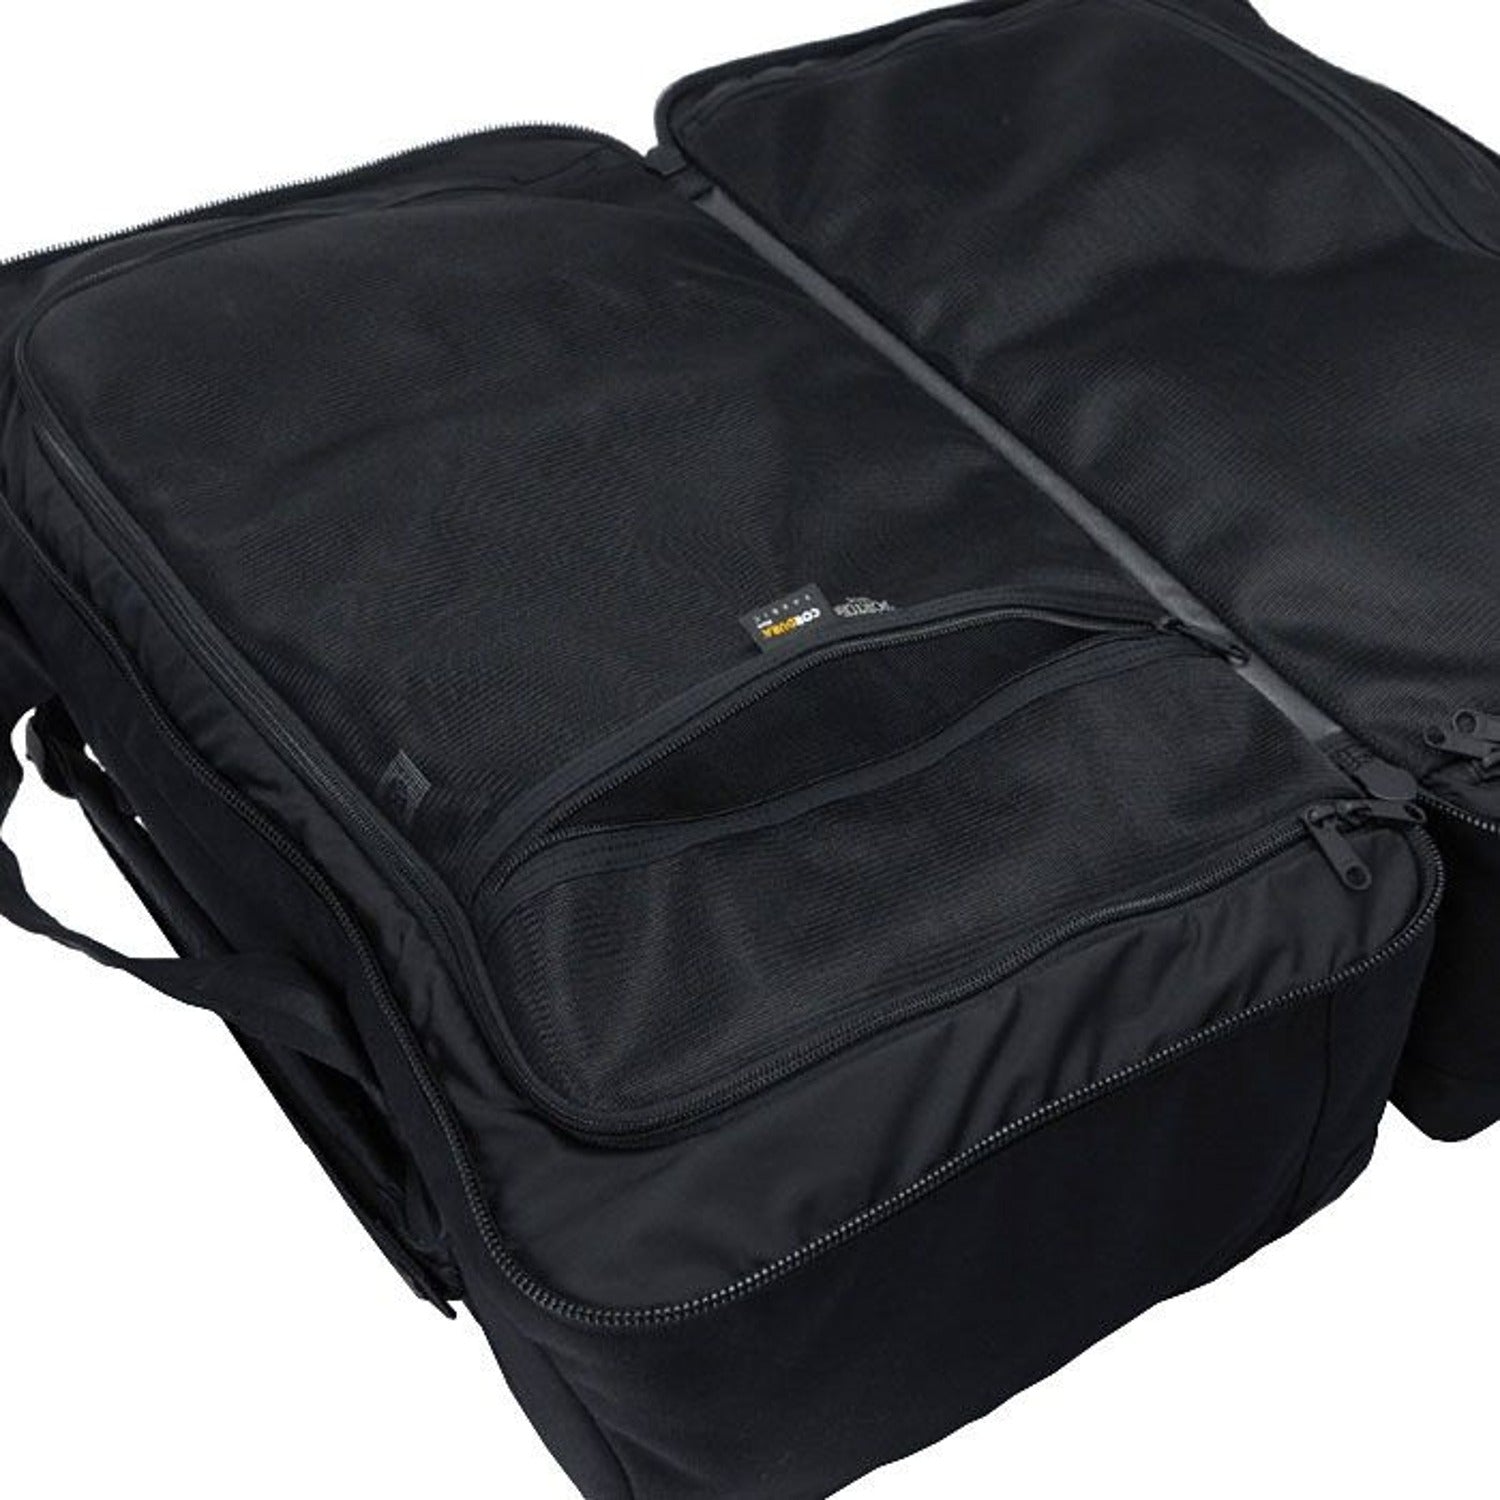 Porter Booth Pack 3Way Duffle Luna Bag L Black - Luna BagS - Canada